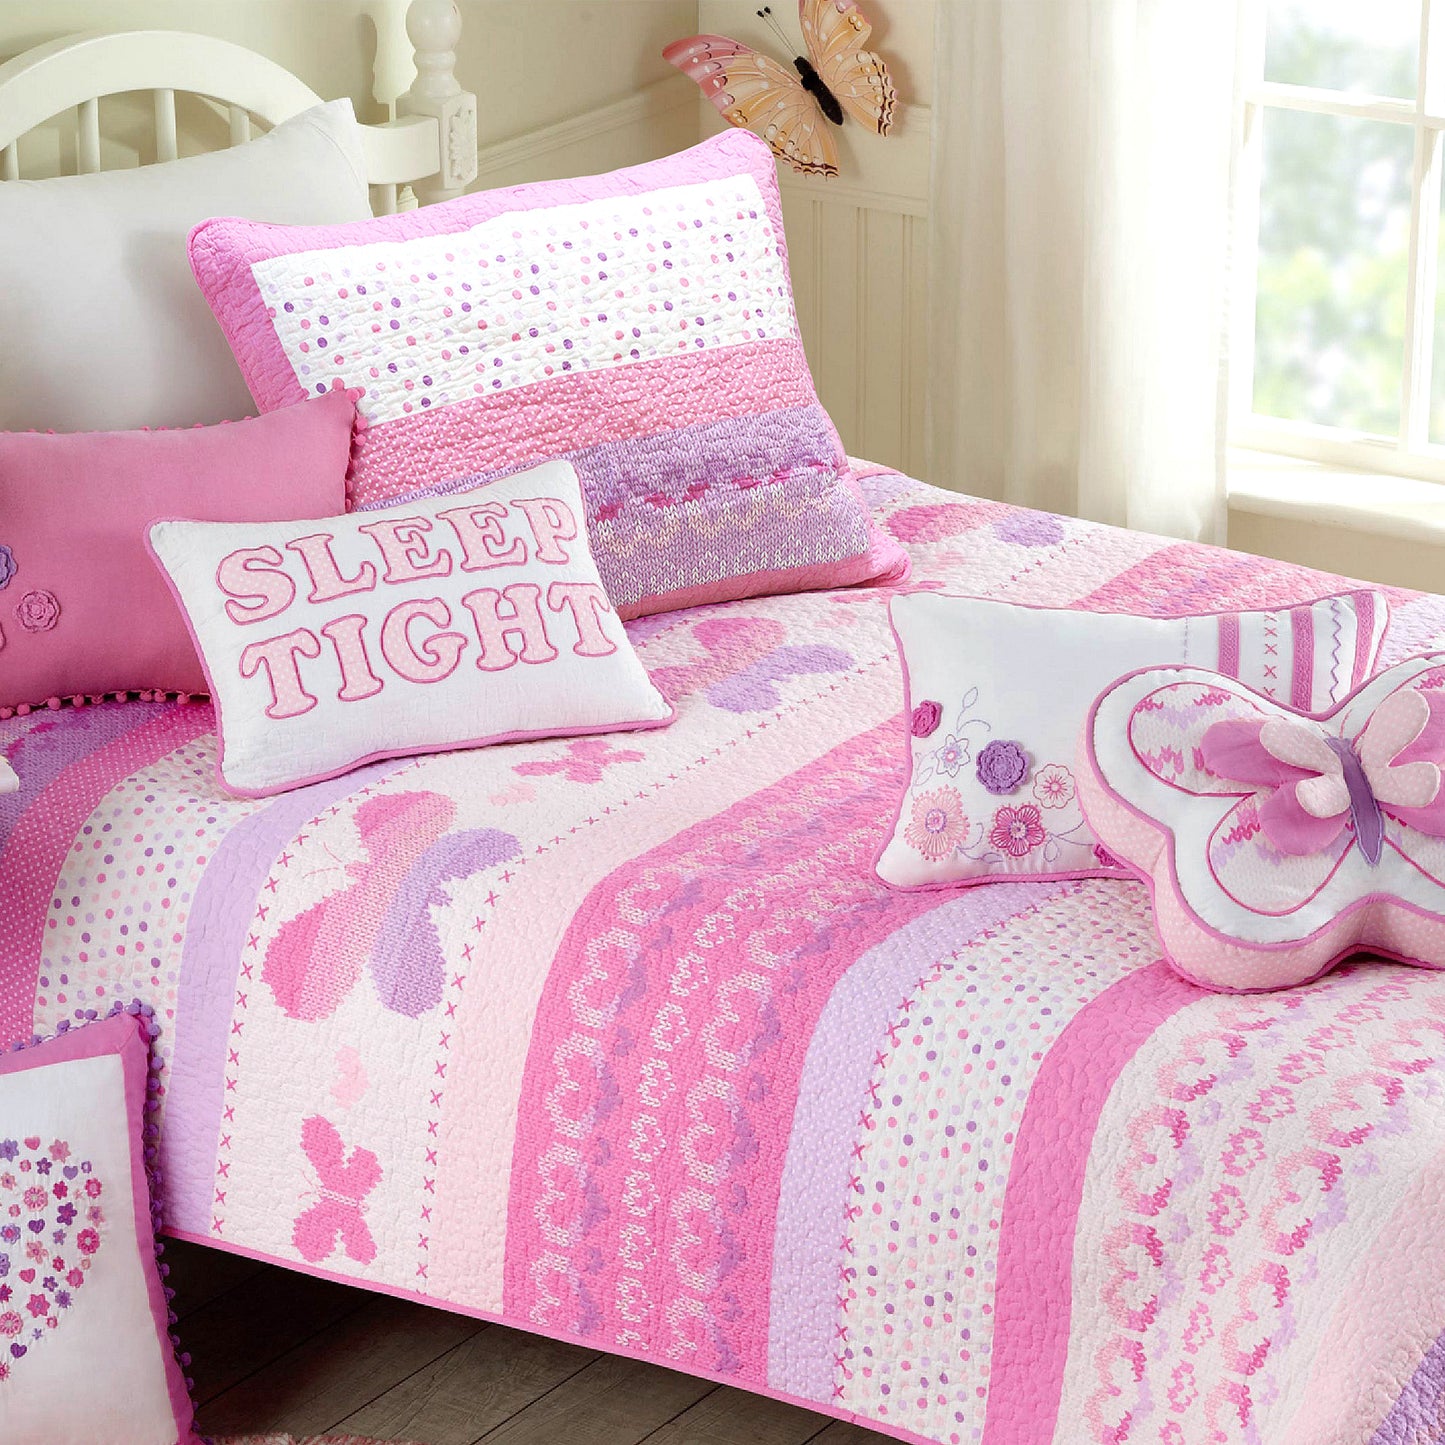 Butterfly Fairisle Pink Purple Striped Floral Rectangular Decor Throw Pillow